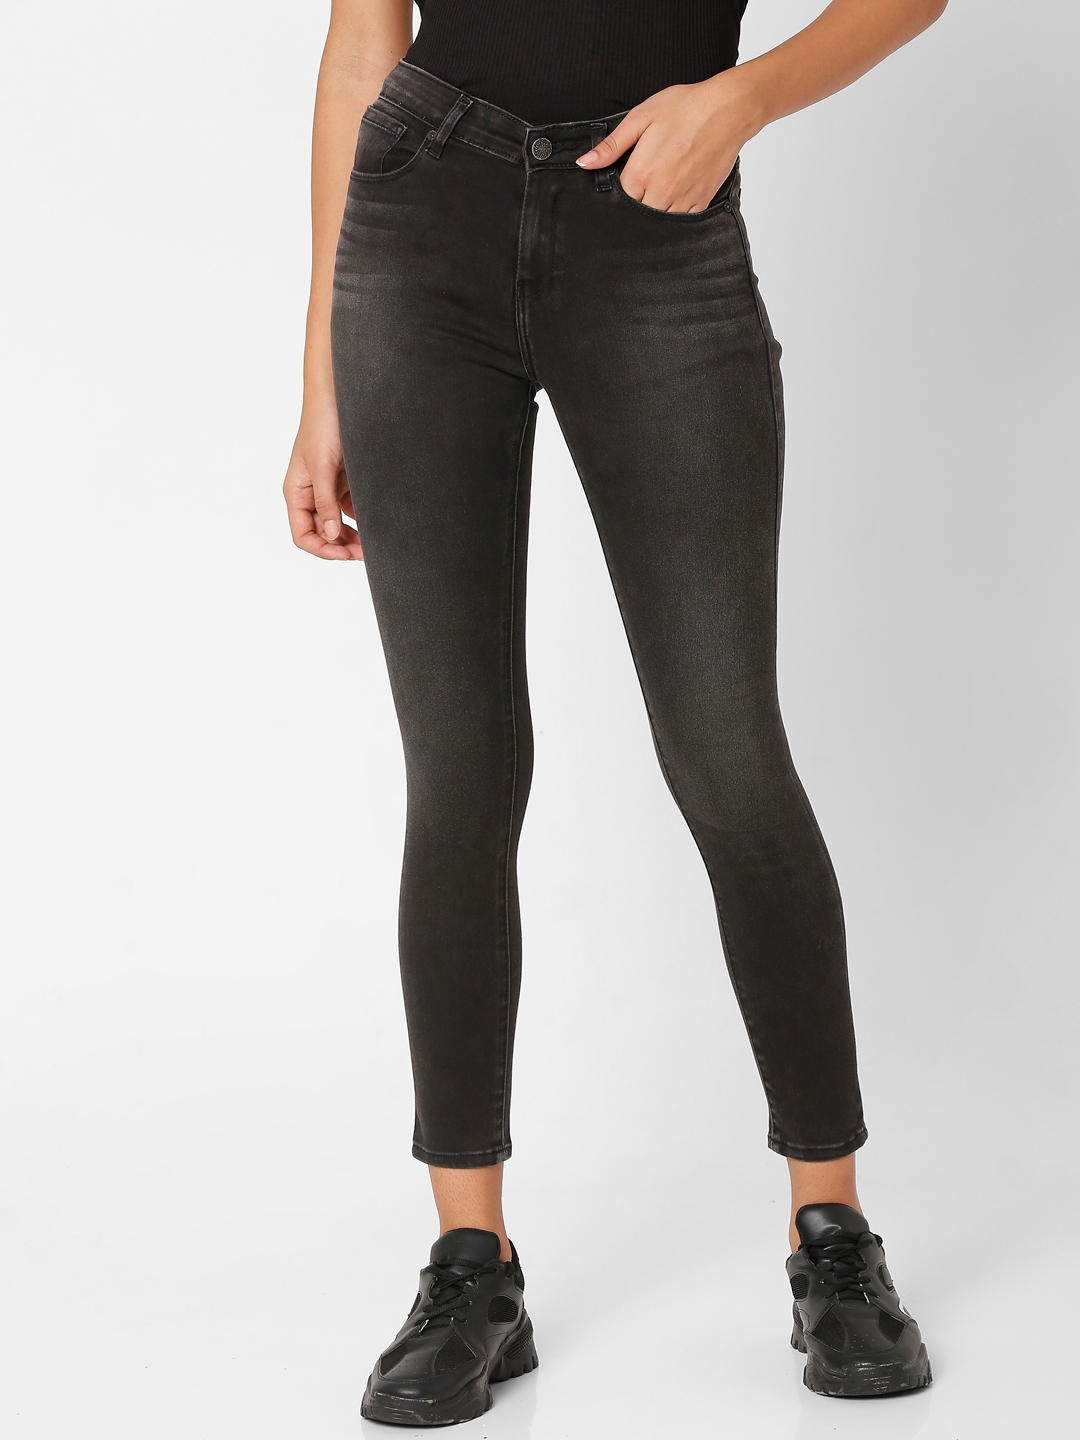 Women's Black Cotton Straight Jeans